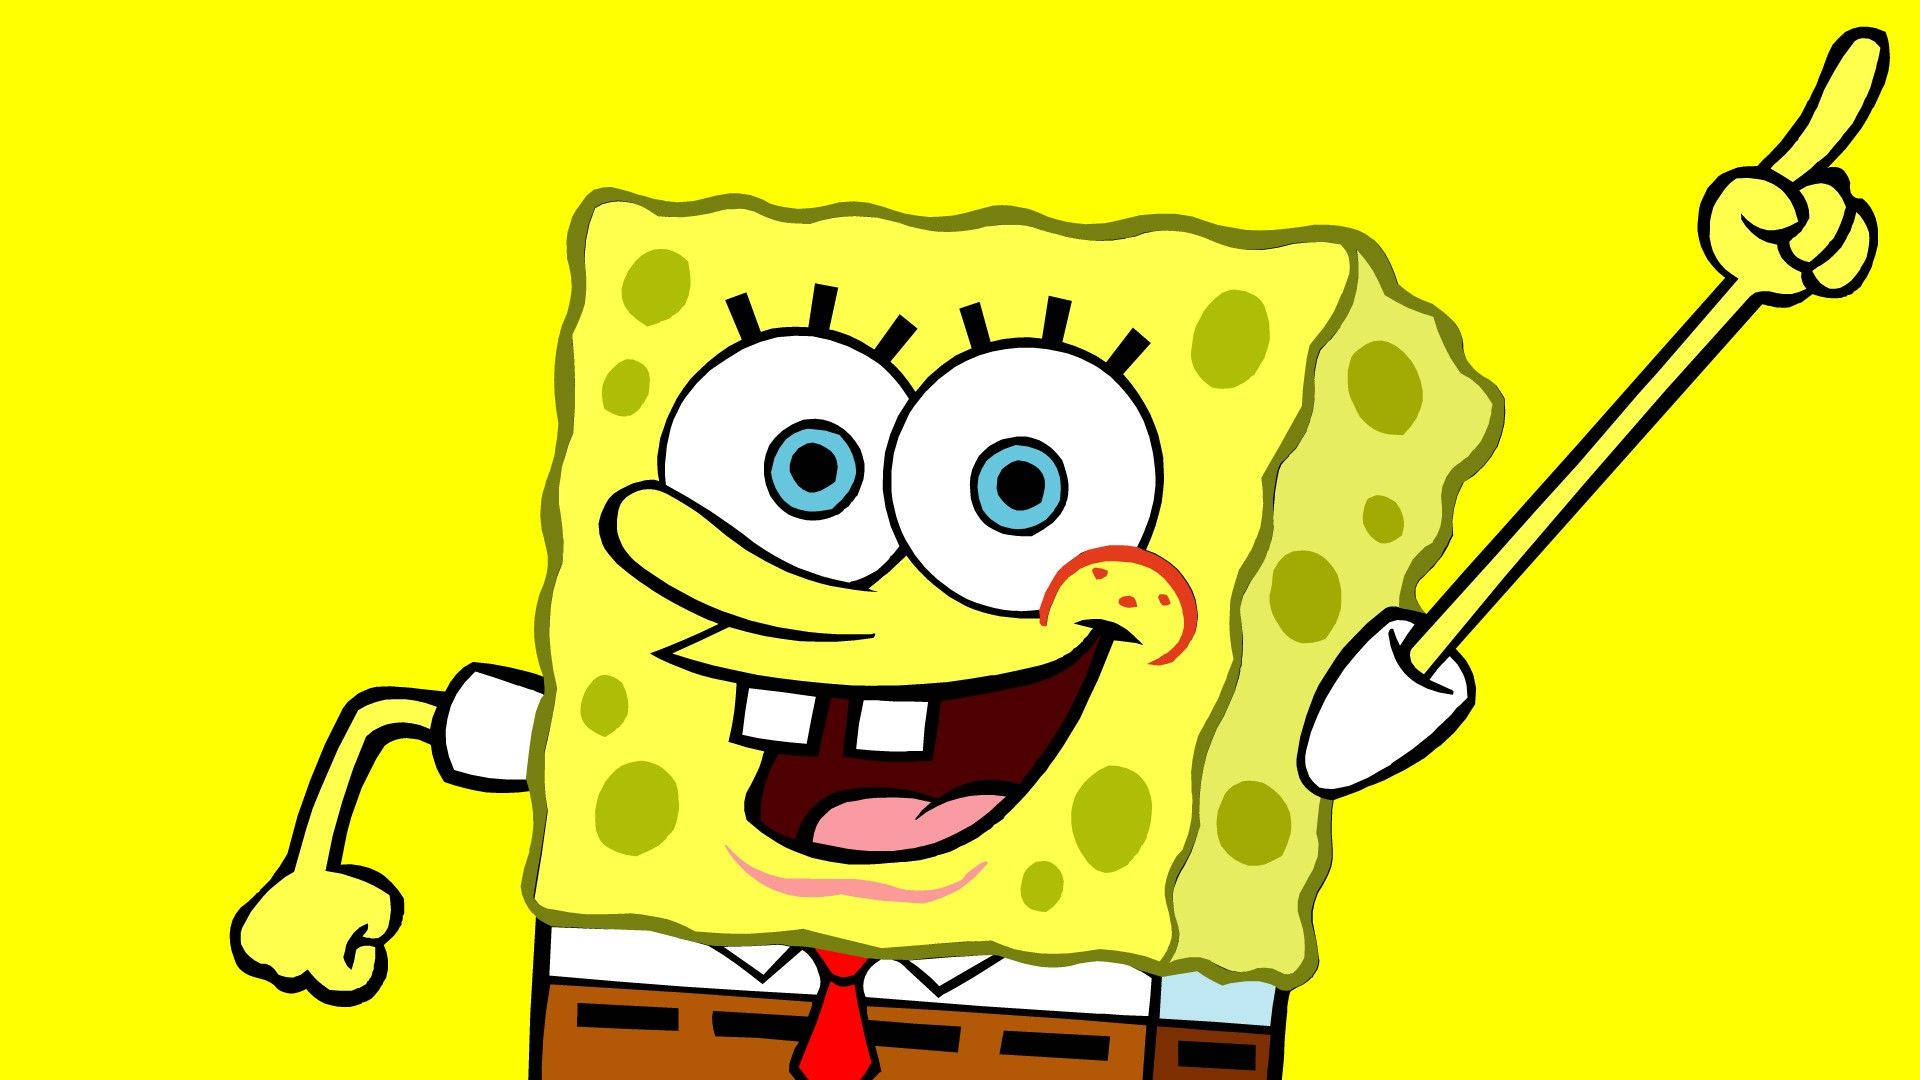 Cool Spongebob - The Iconic Cartoon Character!